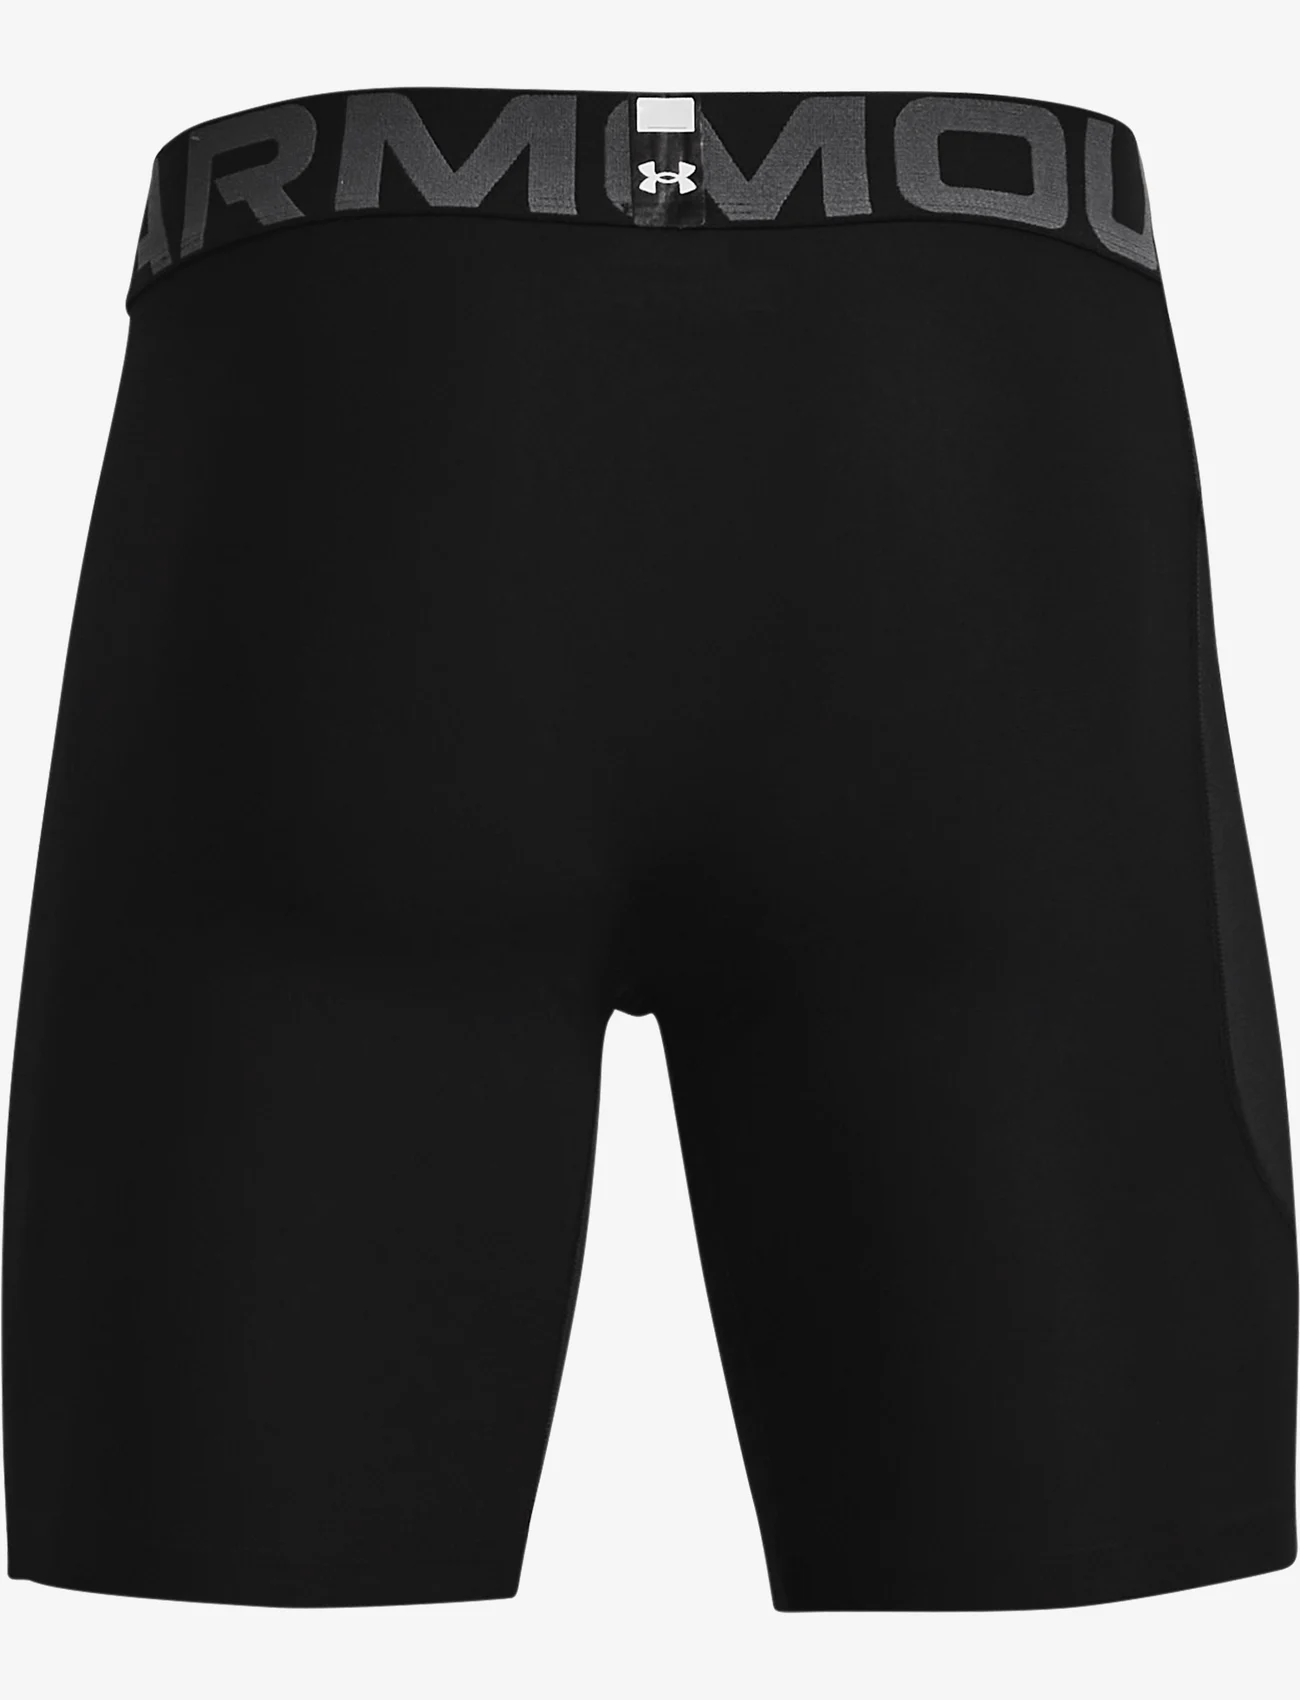 Under Armour - UA HG Armour Shorts - training shorts - black - 1